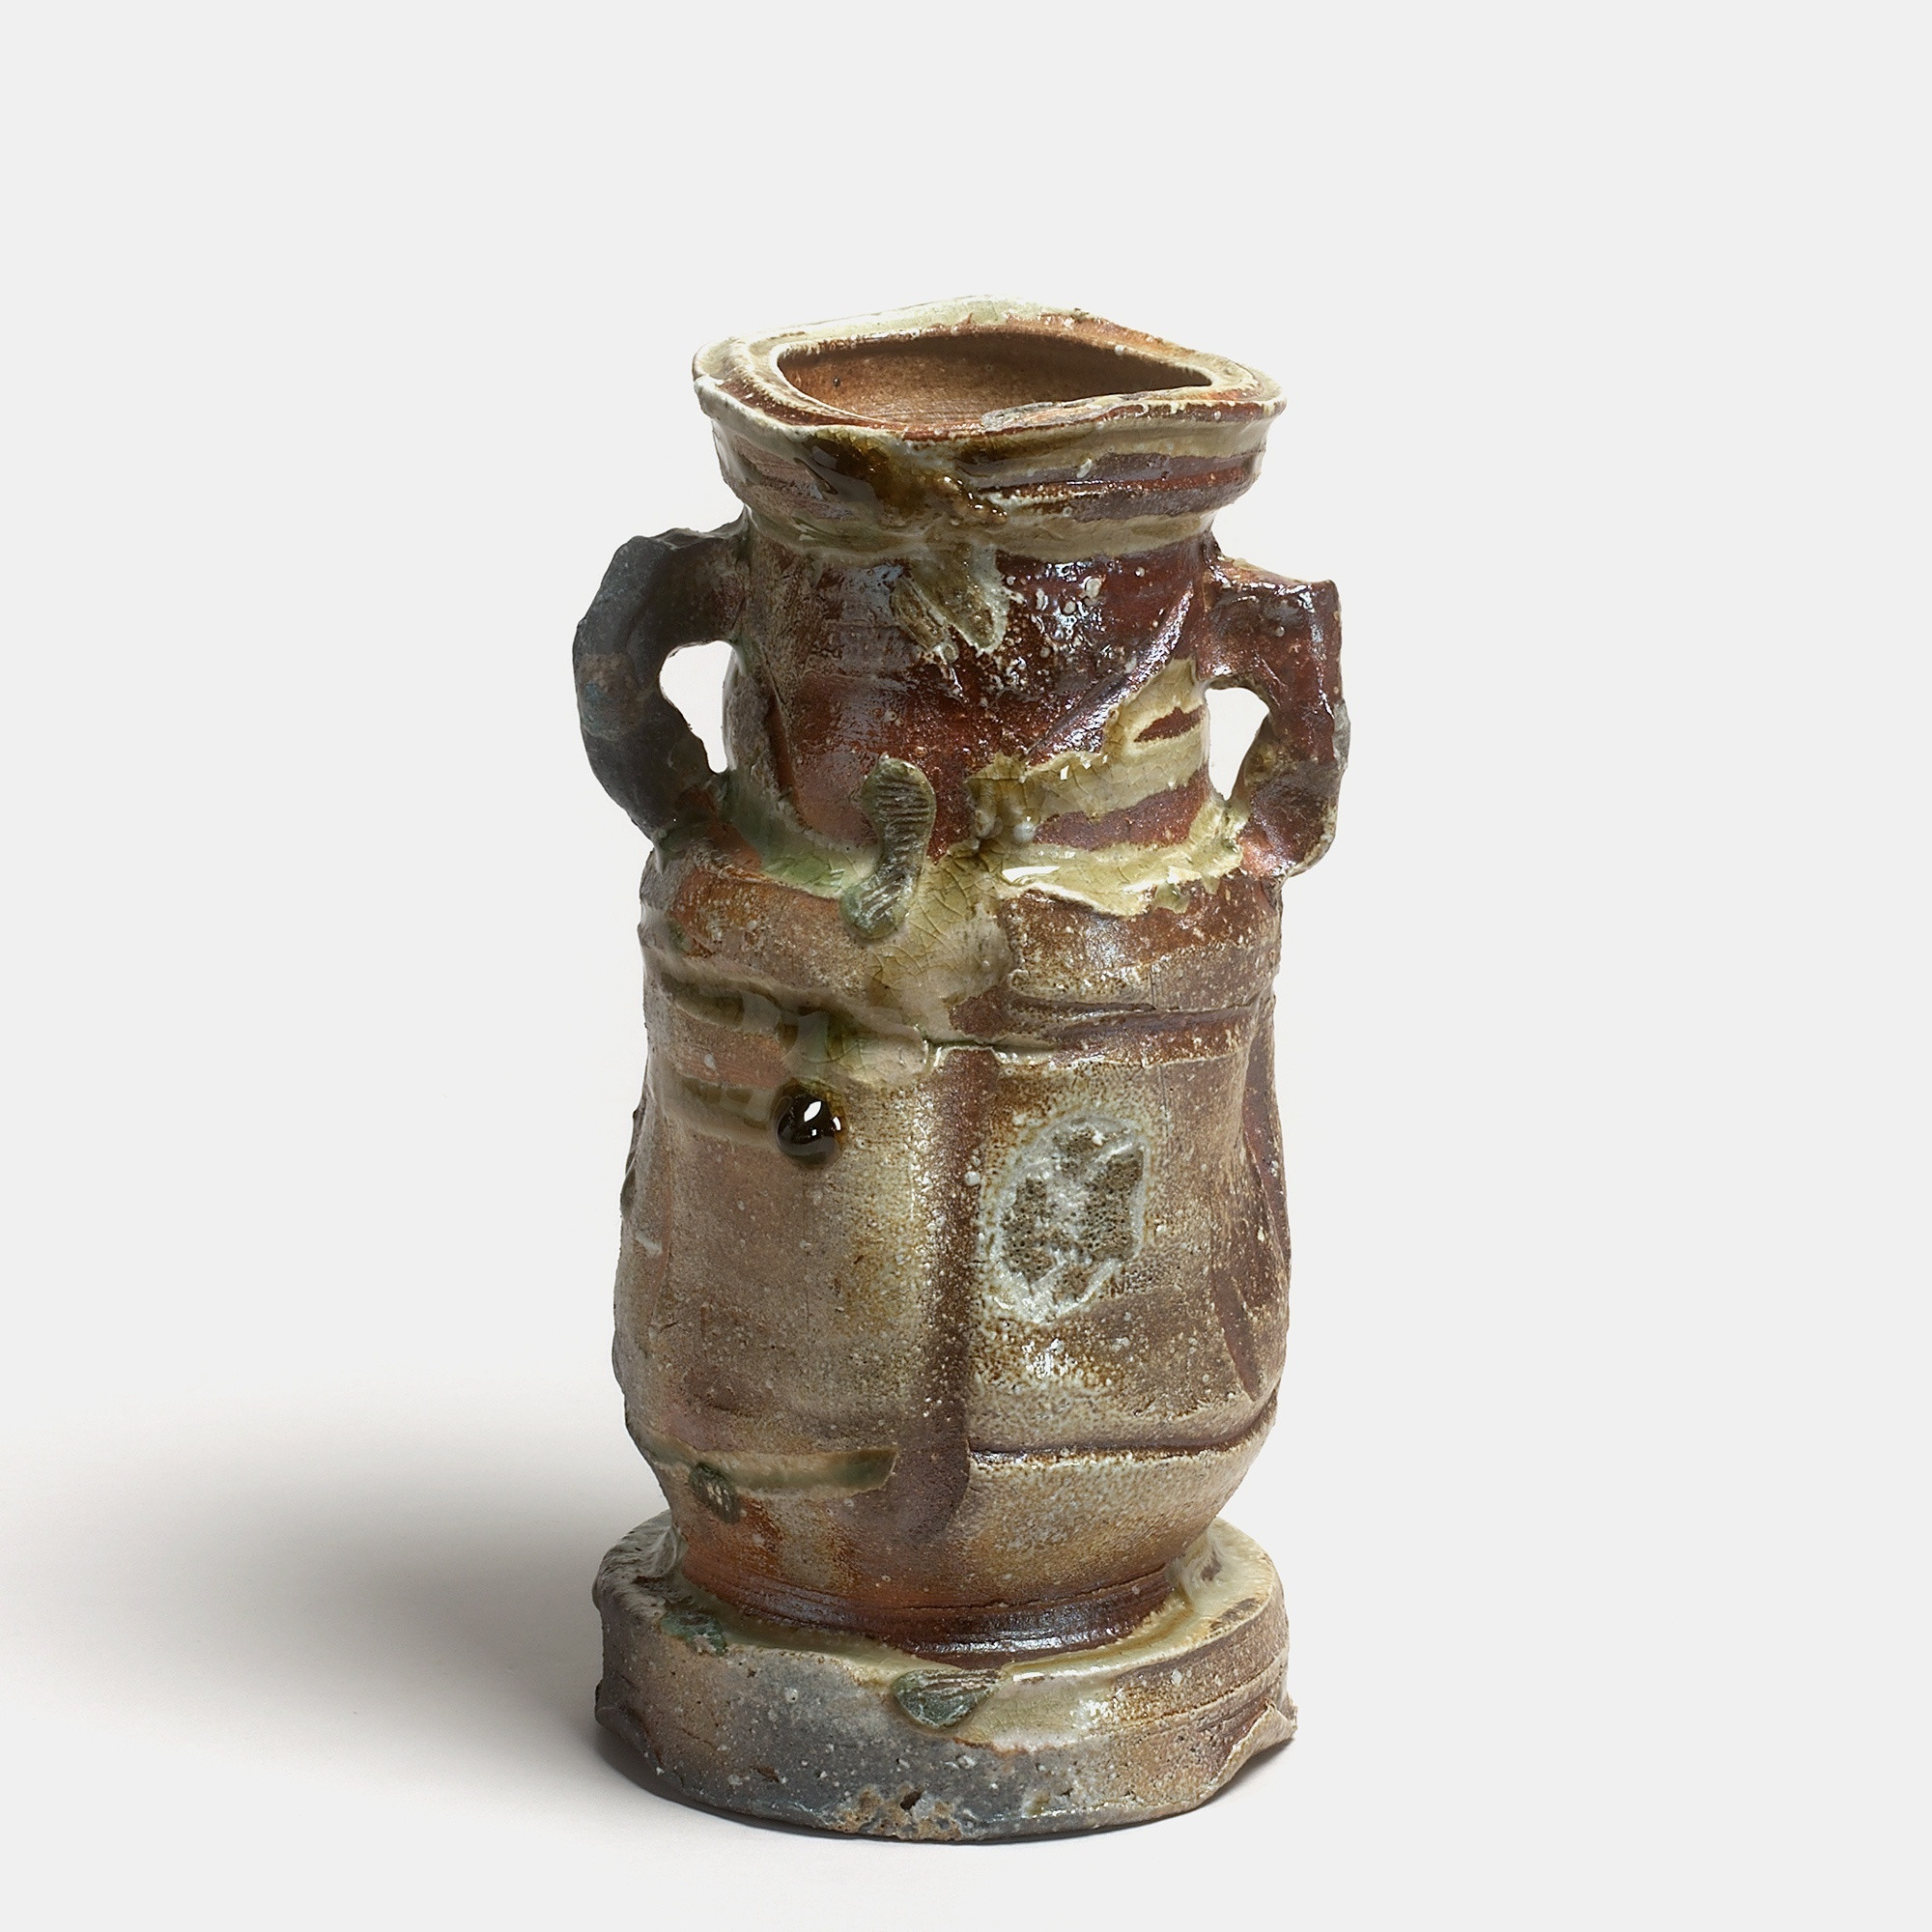 22 Amazing Frog Vase Pottery 2023 free download frog vase pottery of kei tanimoto 019477 vase hanaire iga typ 2010 keramik within 019477 vase hanaire